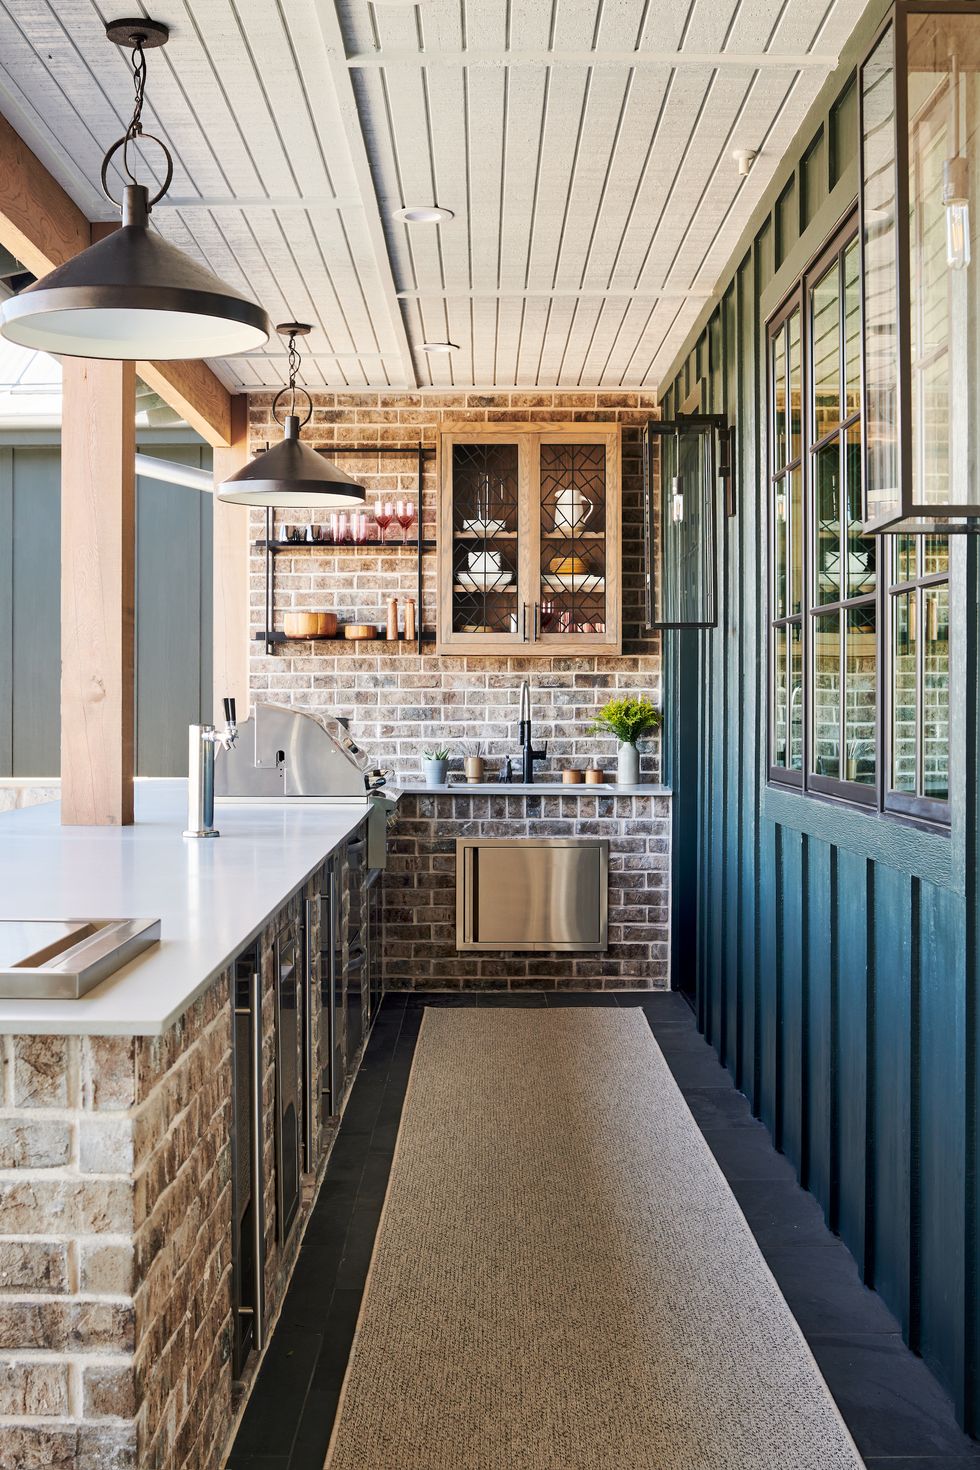 16 Outdoor Kitchen Design Ideas and Pictures - Alfresco Kitchen Styles